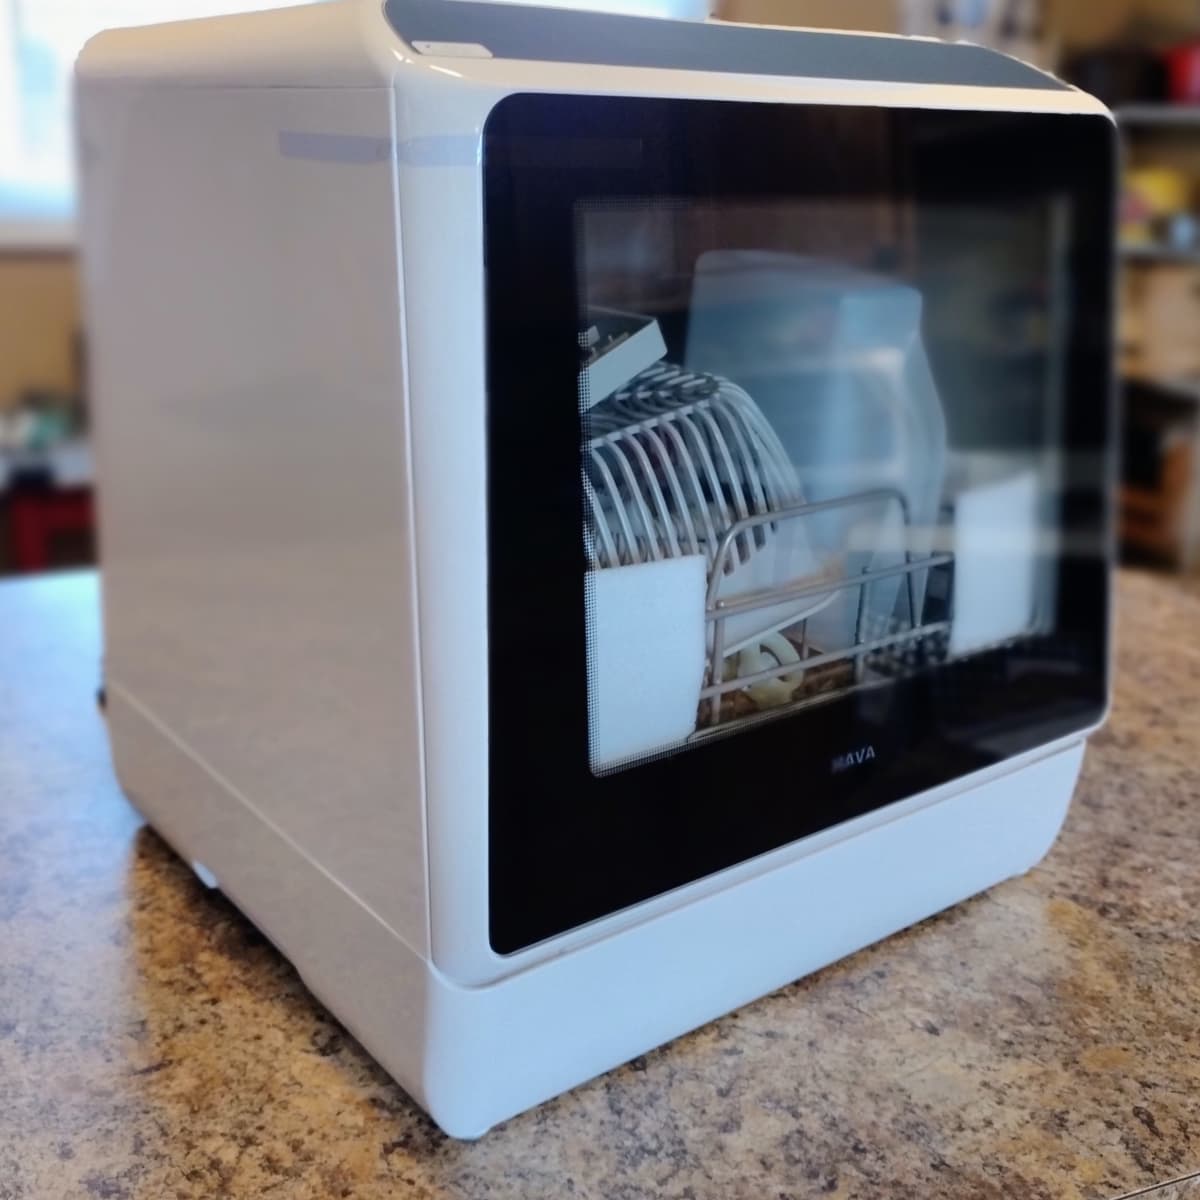 NOVETE Countertop Portable Dishwasher Review